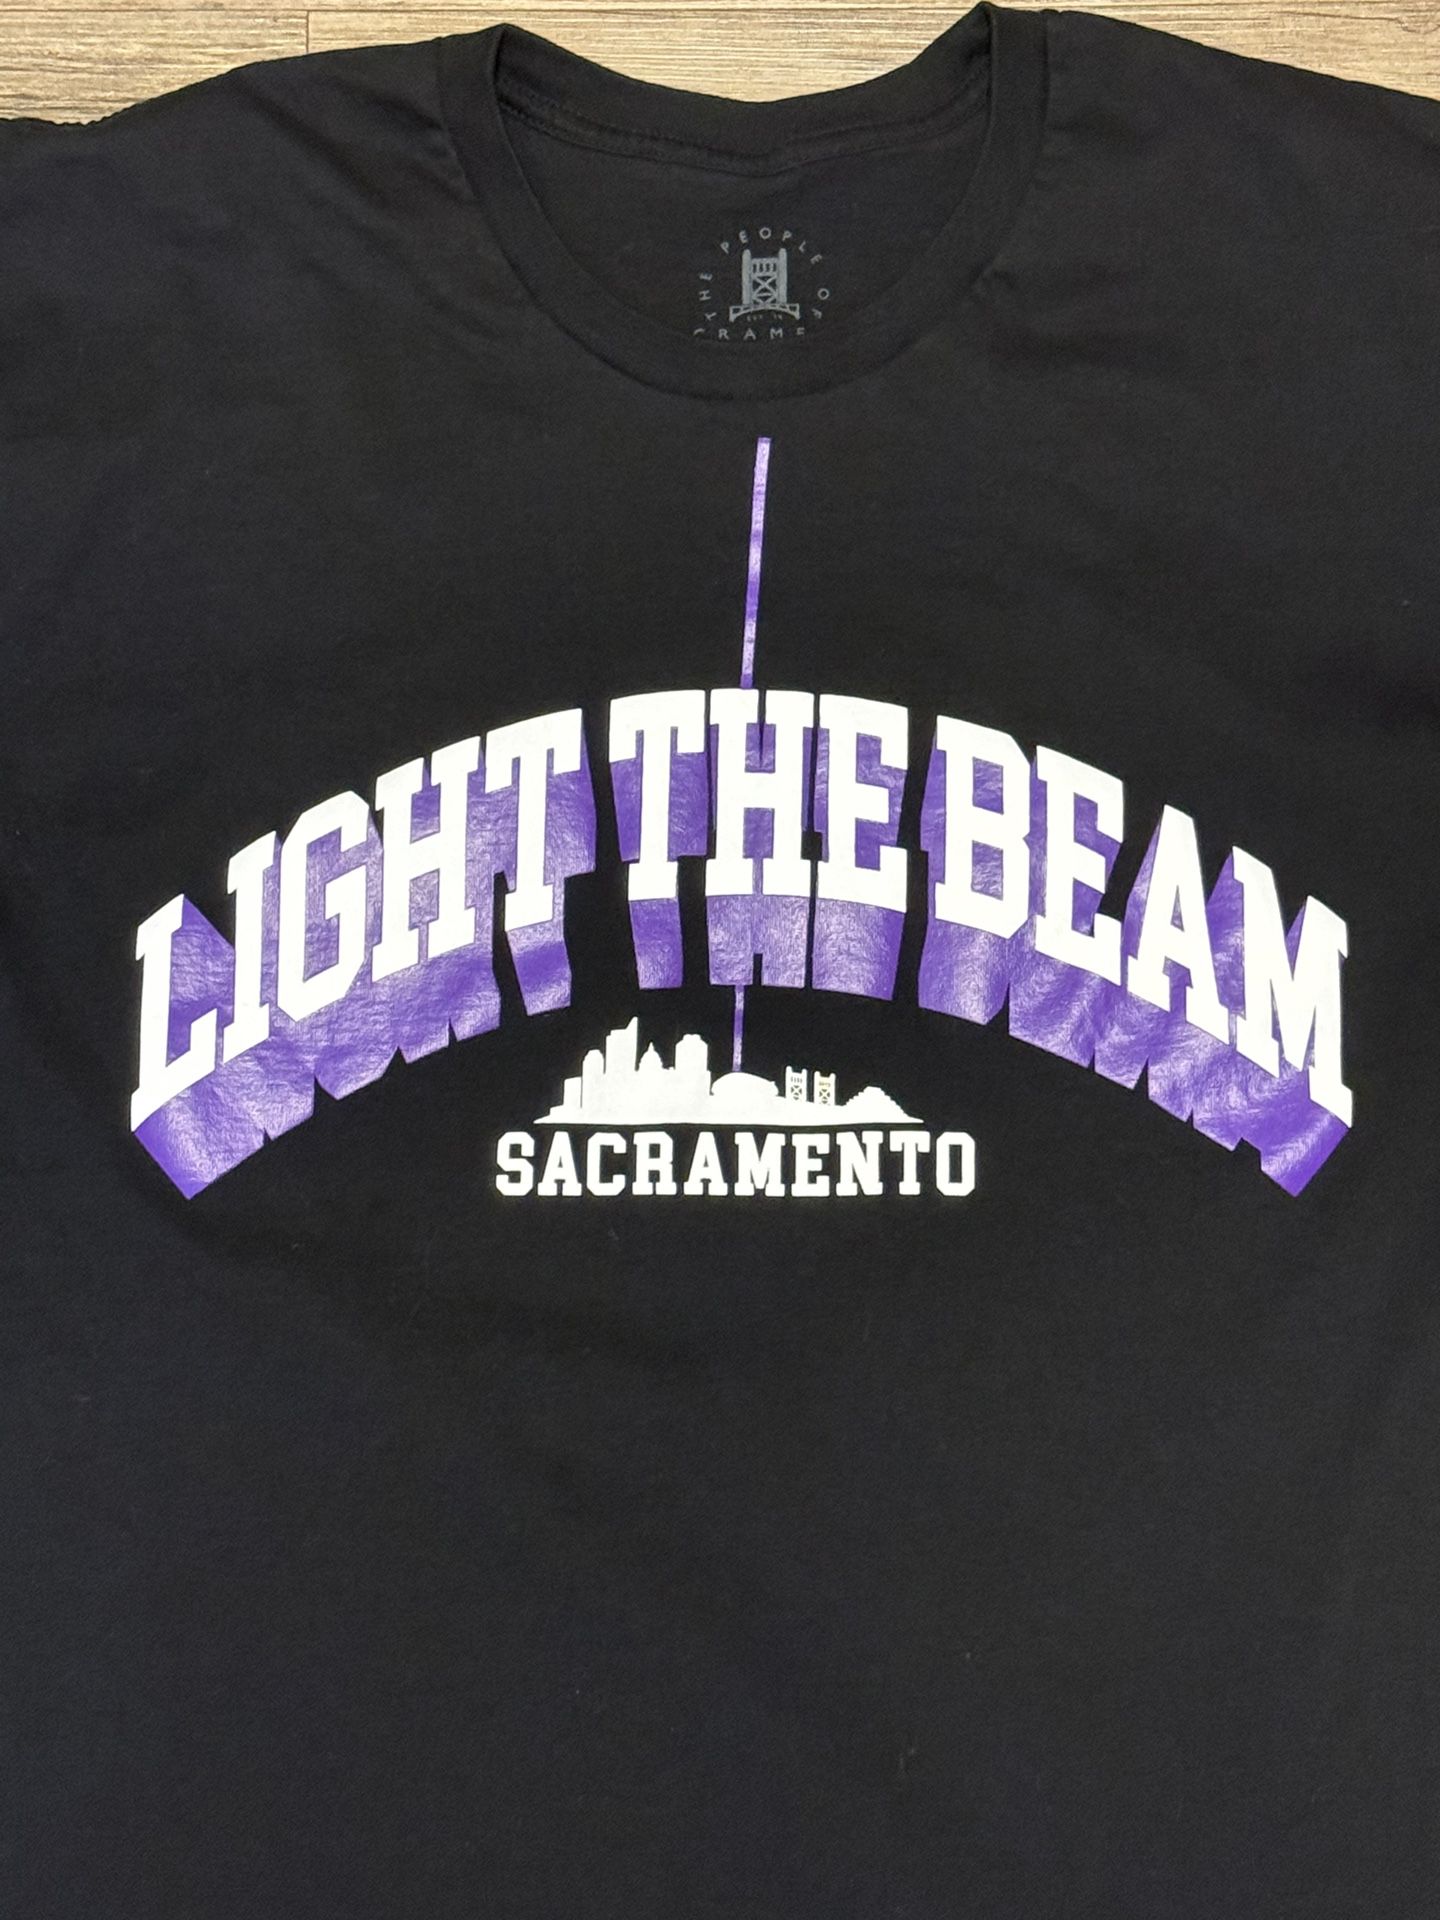 Sacramento Kings “Light The Beam” Shirt. Men’s Size XL. The People Of Sacramento Apparel. $10.00